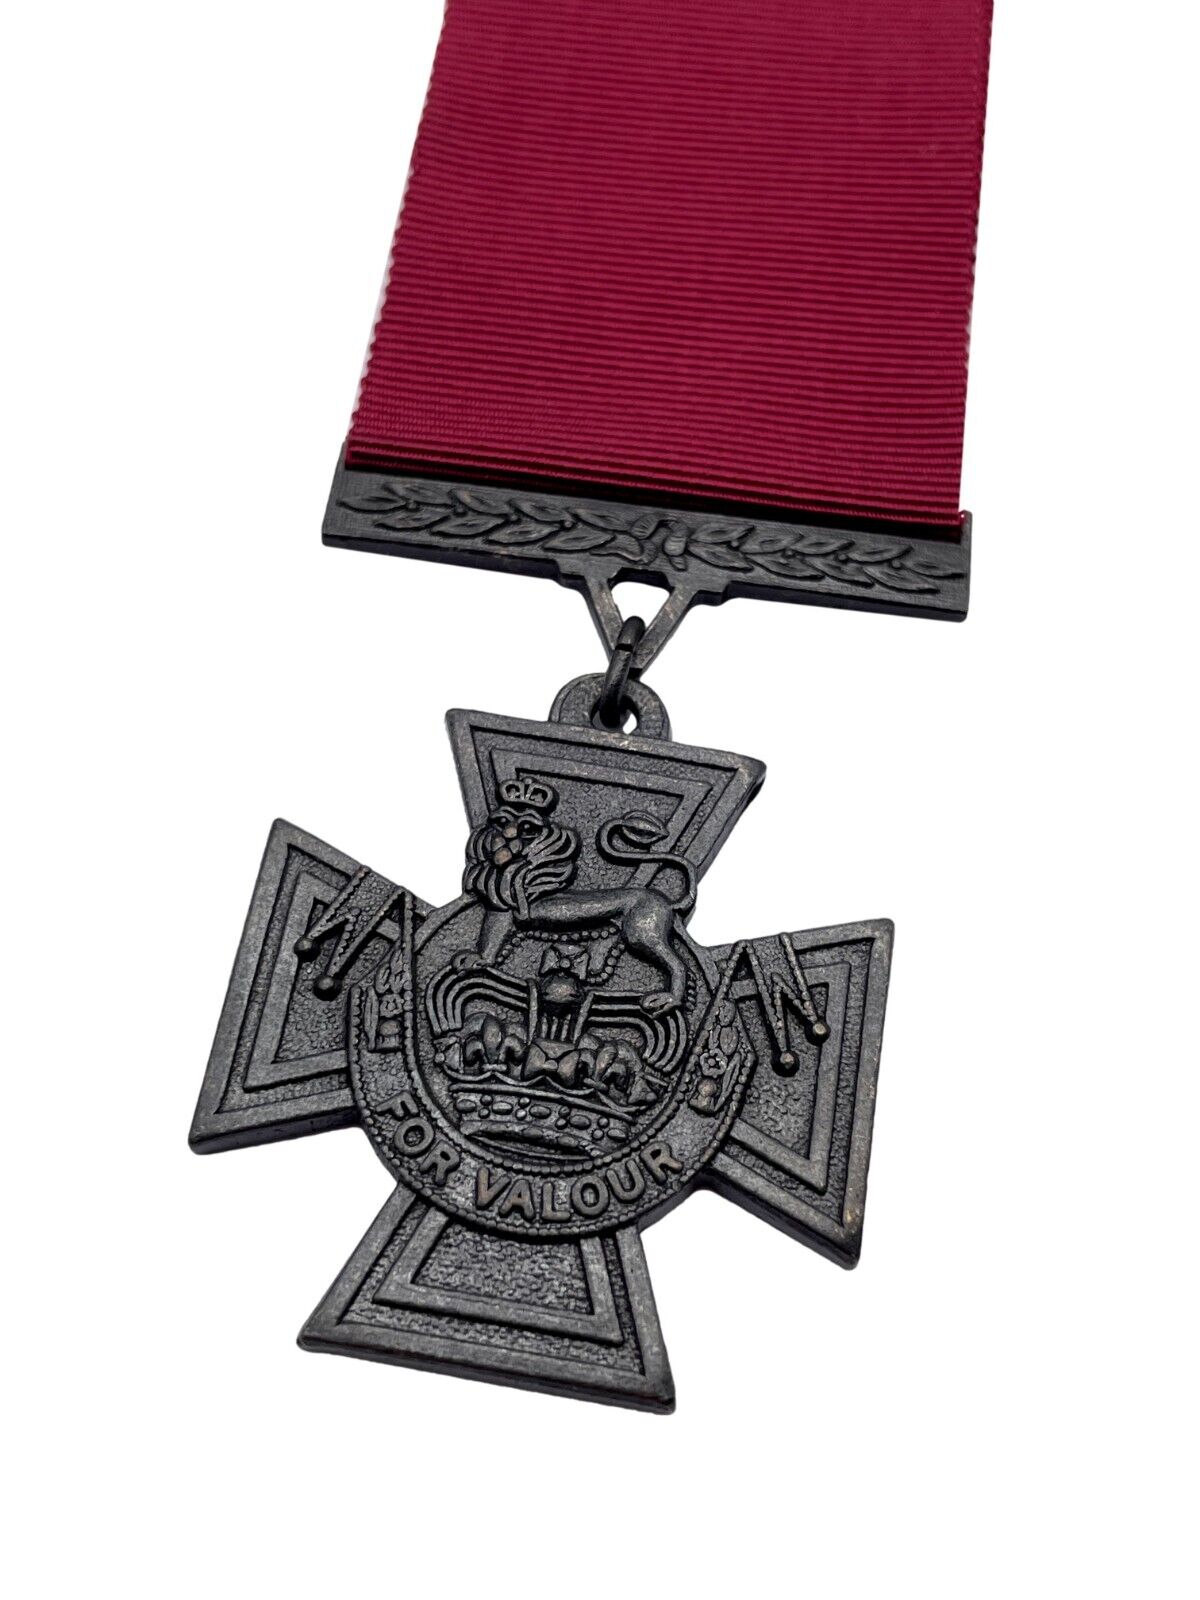 Replica Victoria Cross (VC) Medal, Brand New Copy/Reproduction